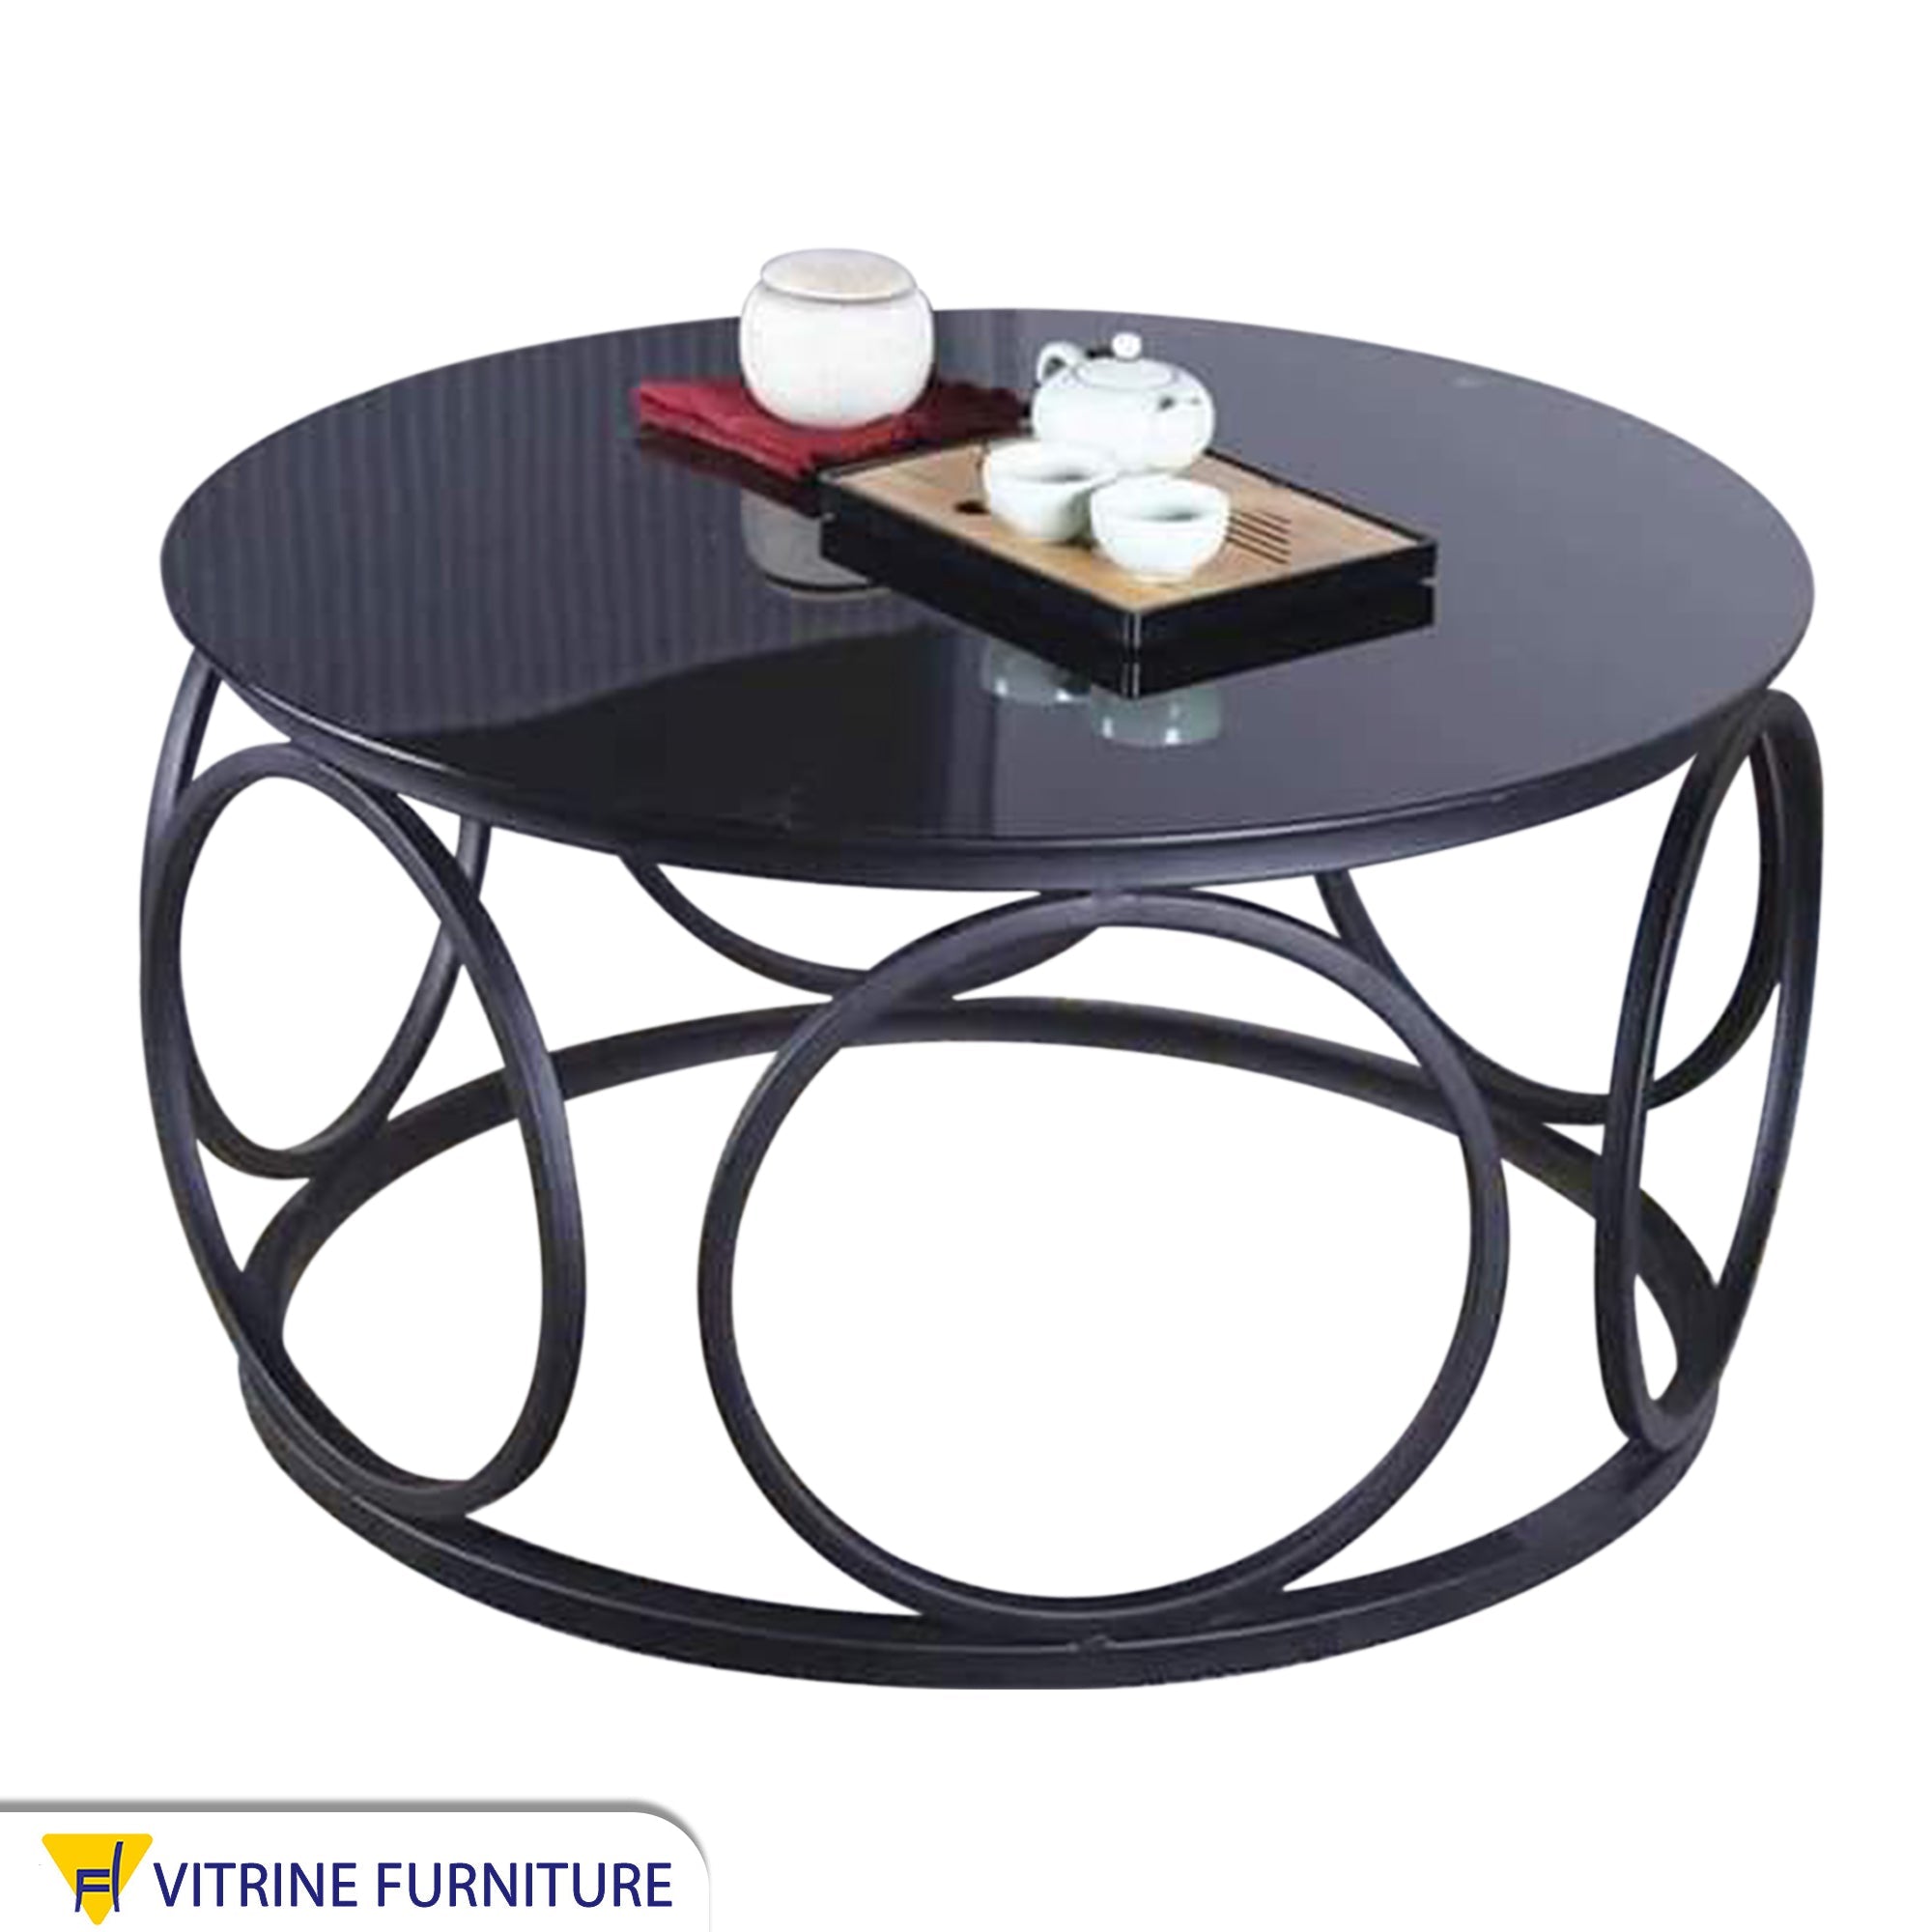 Circular table in black